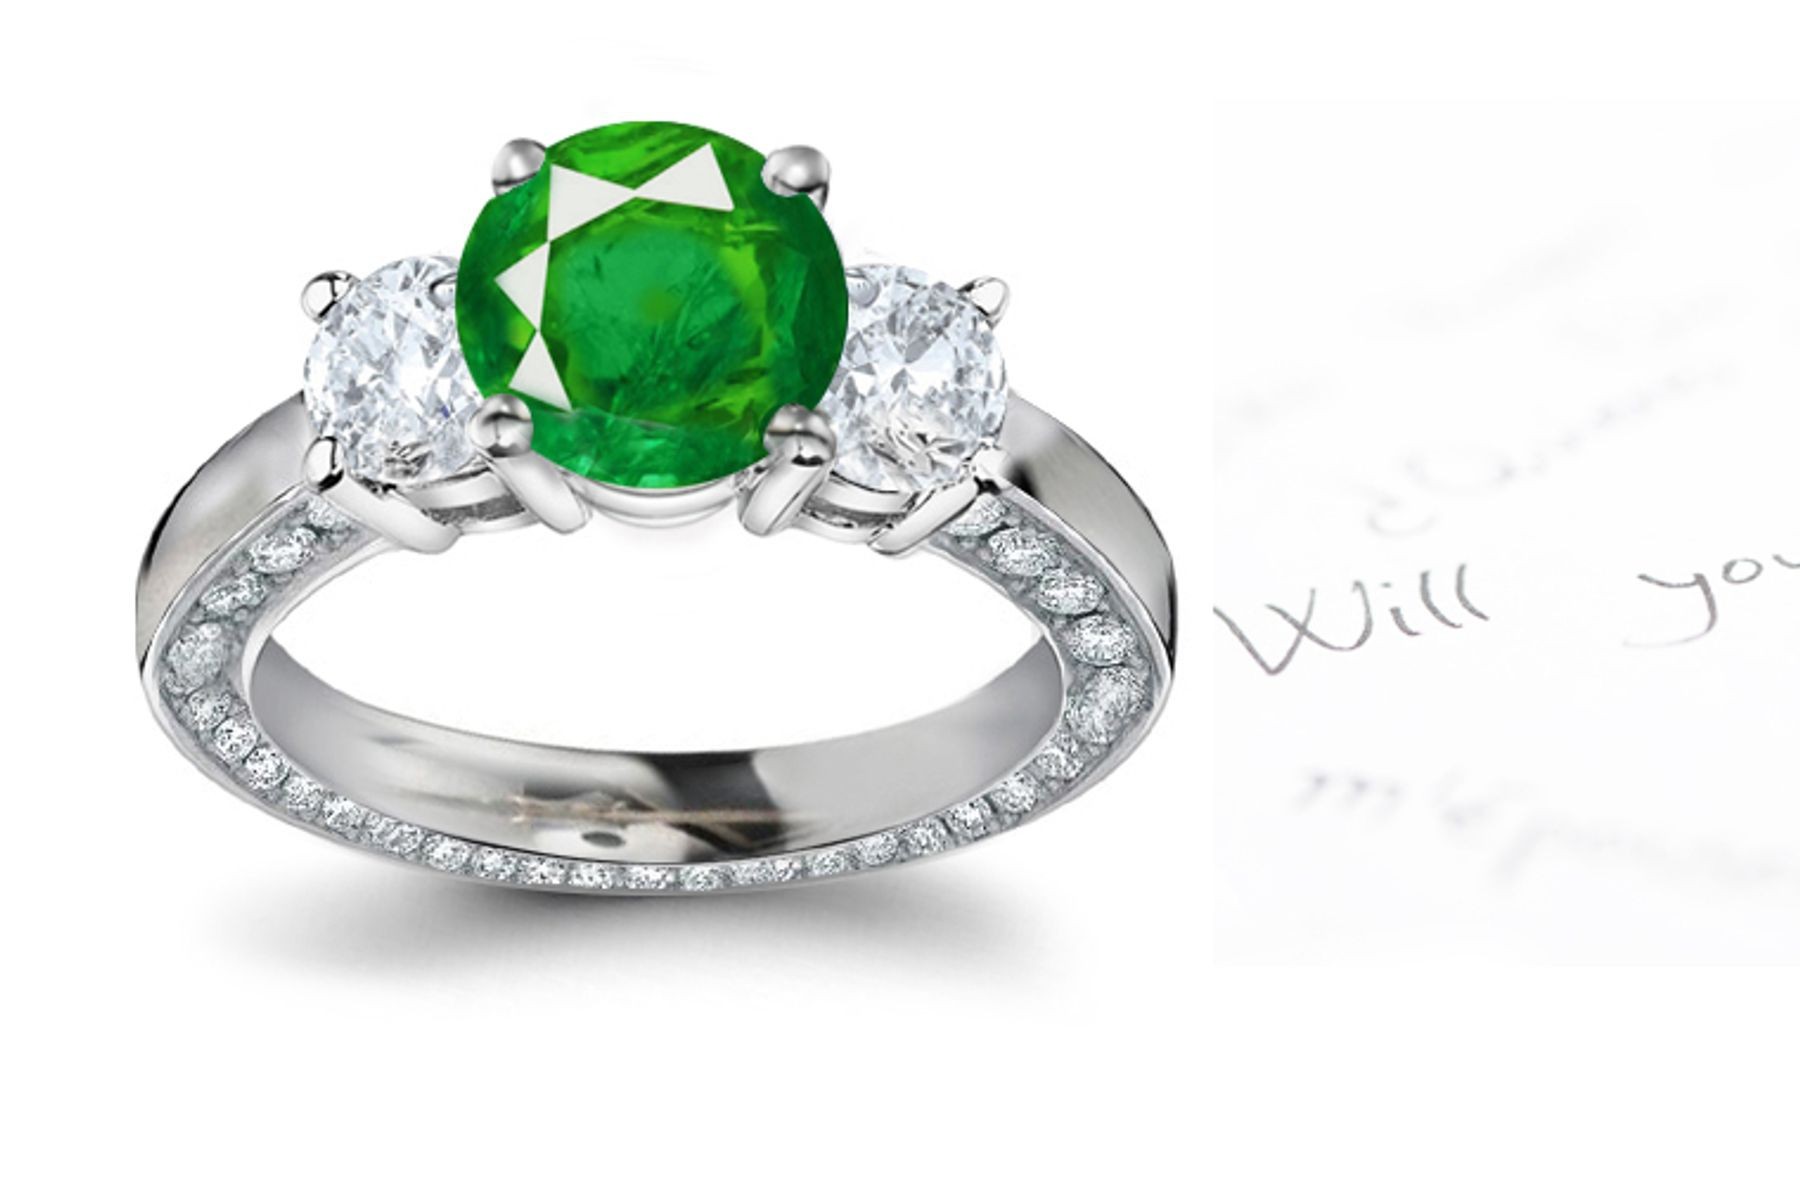 Popular For Hunfreds of Years: A 3 Stone Round Diamond & Round Emerald Halo Ring with Diamond Divine Gods Halo